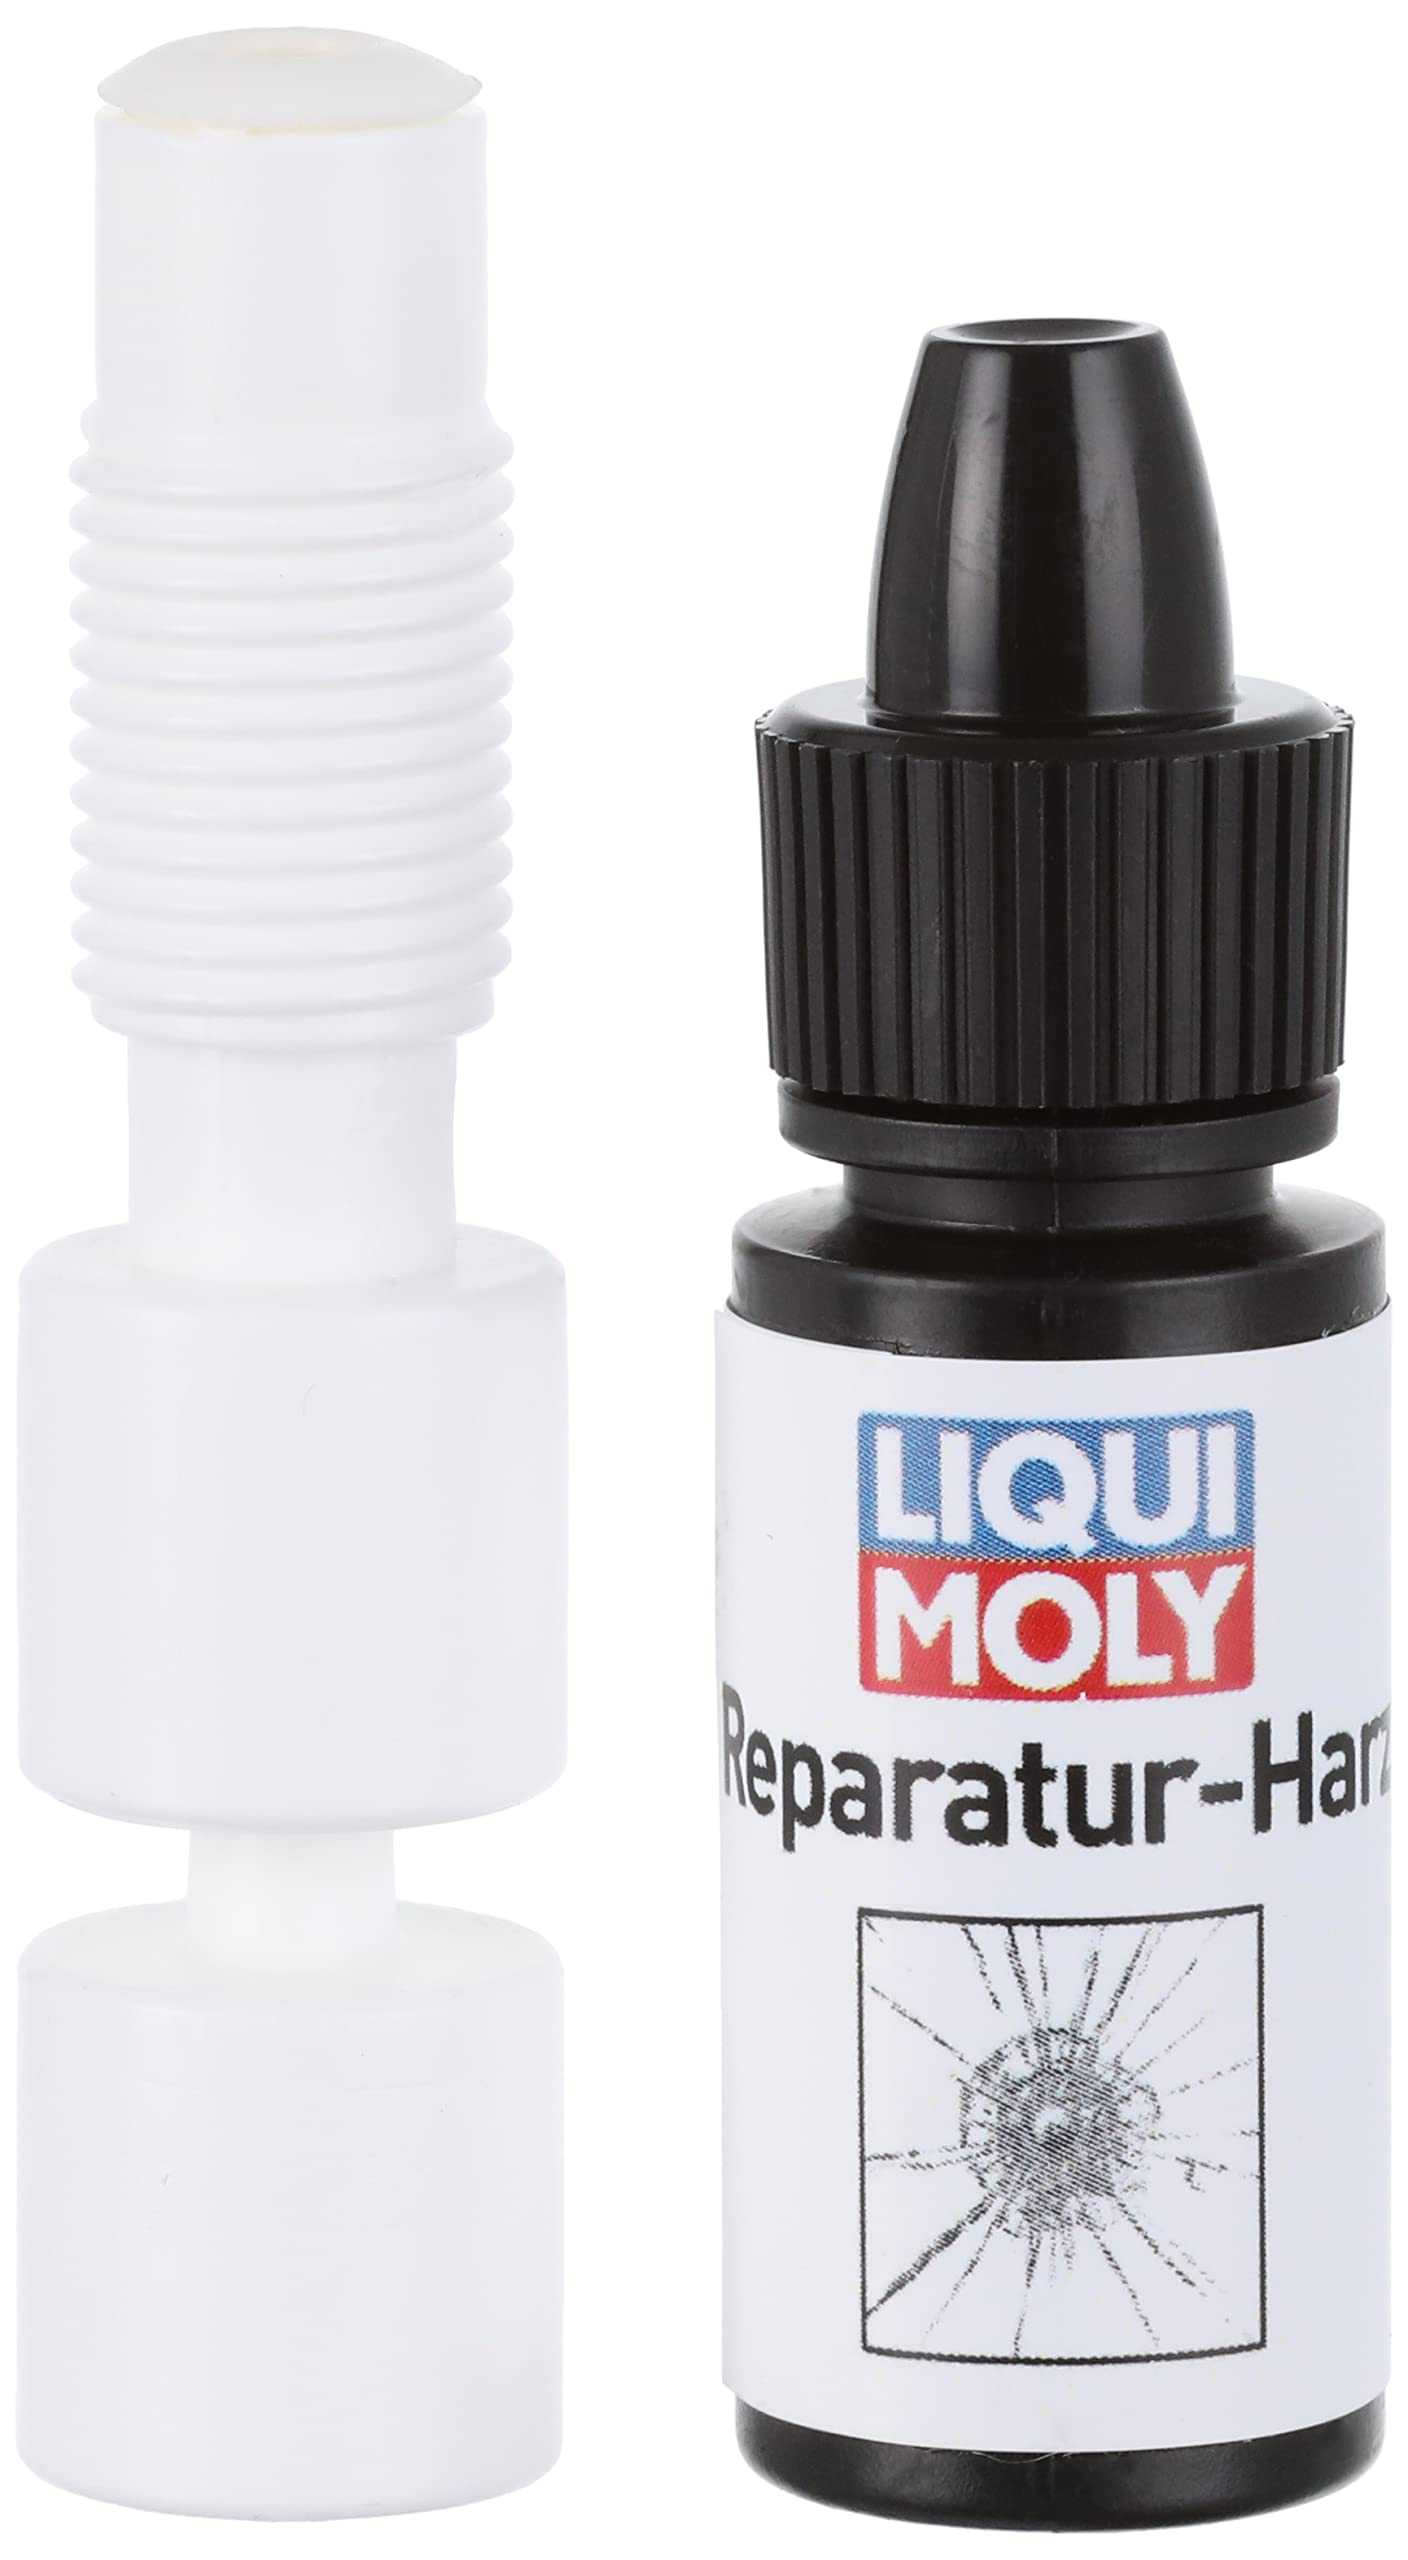 LIQUI MOLY Reparatur-Harz mit Injector | 1 Stk | Klebstoff | Art.-Nr.: 6299 von Liqui Moly